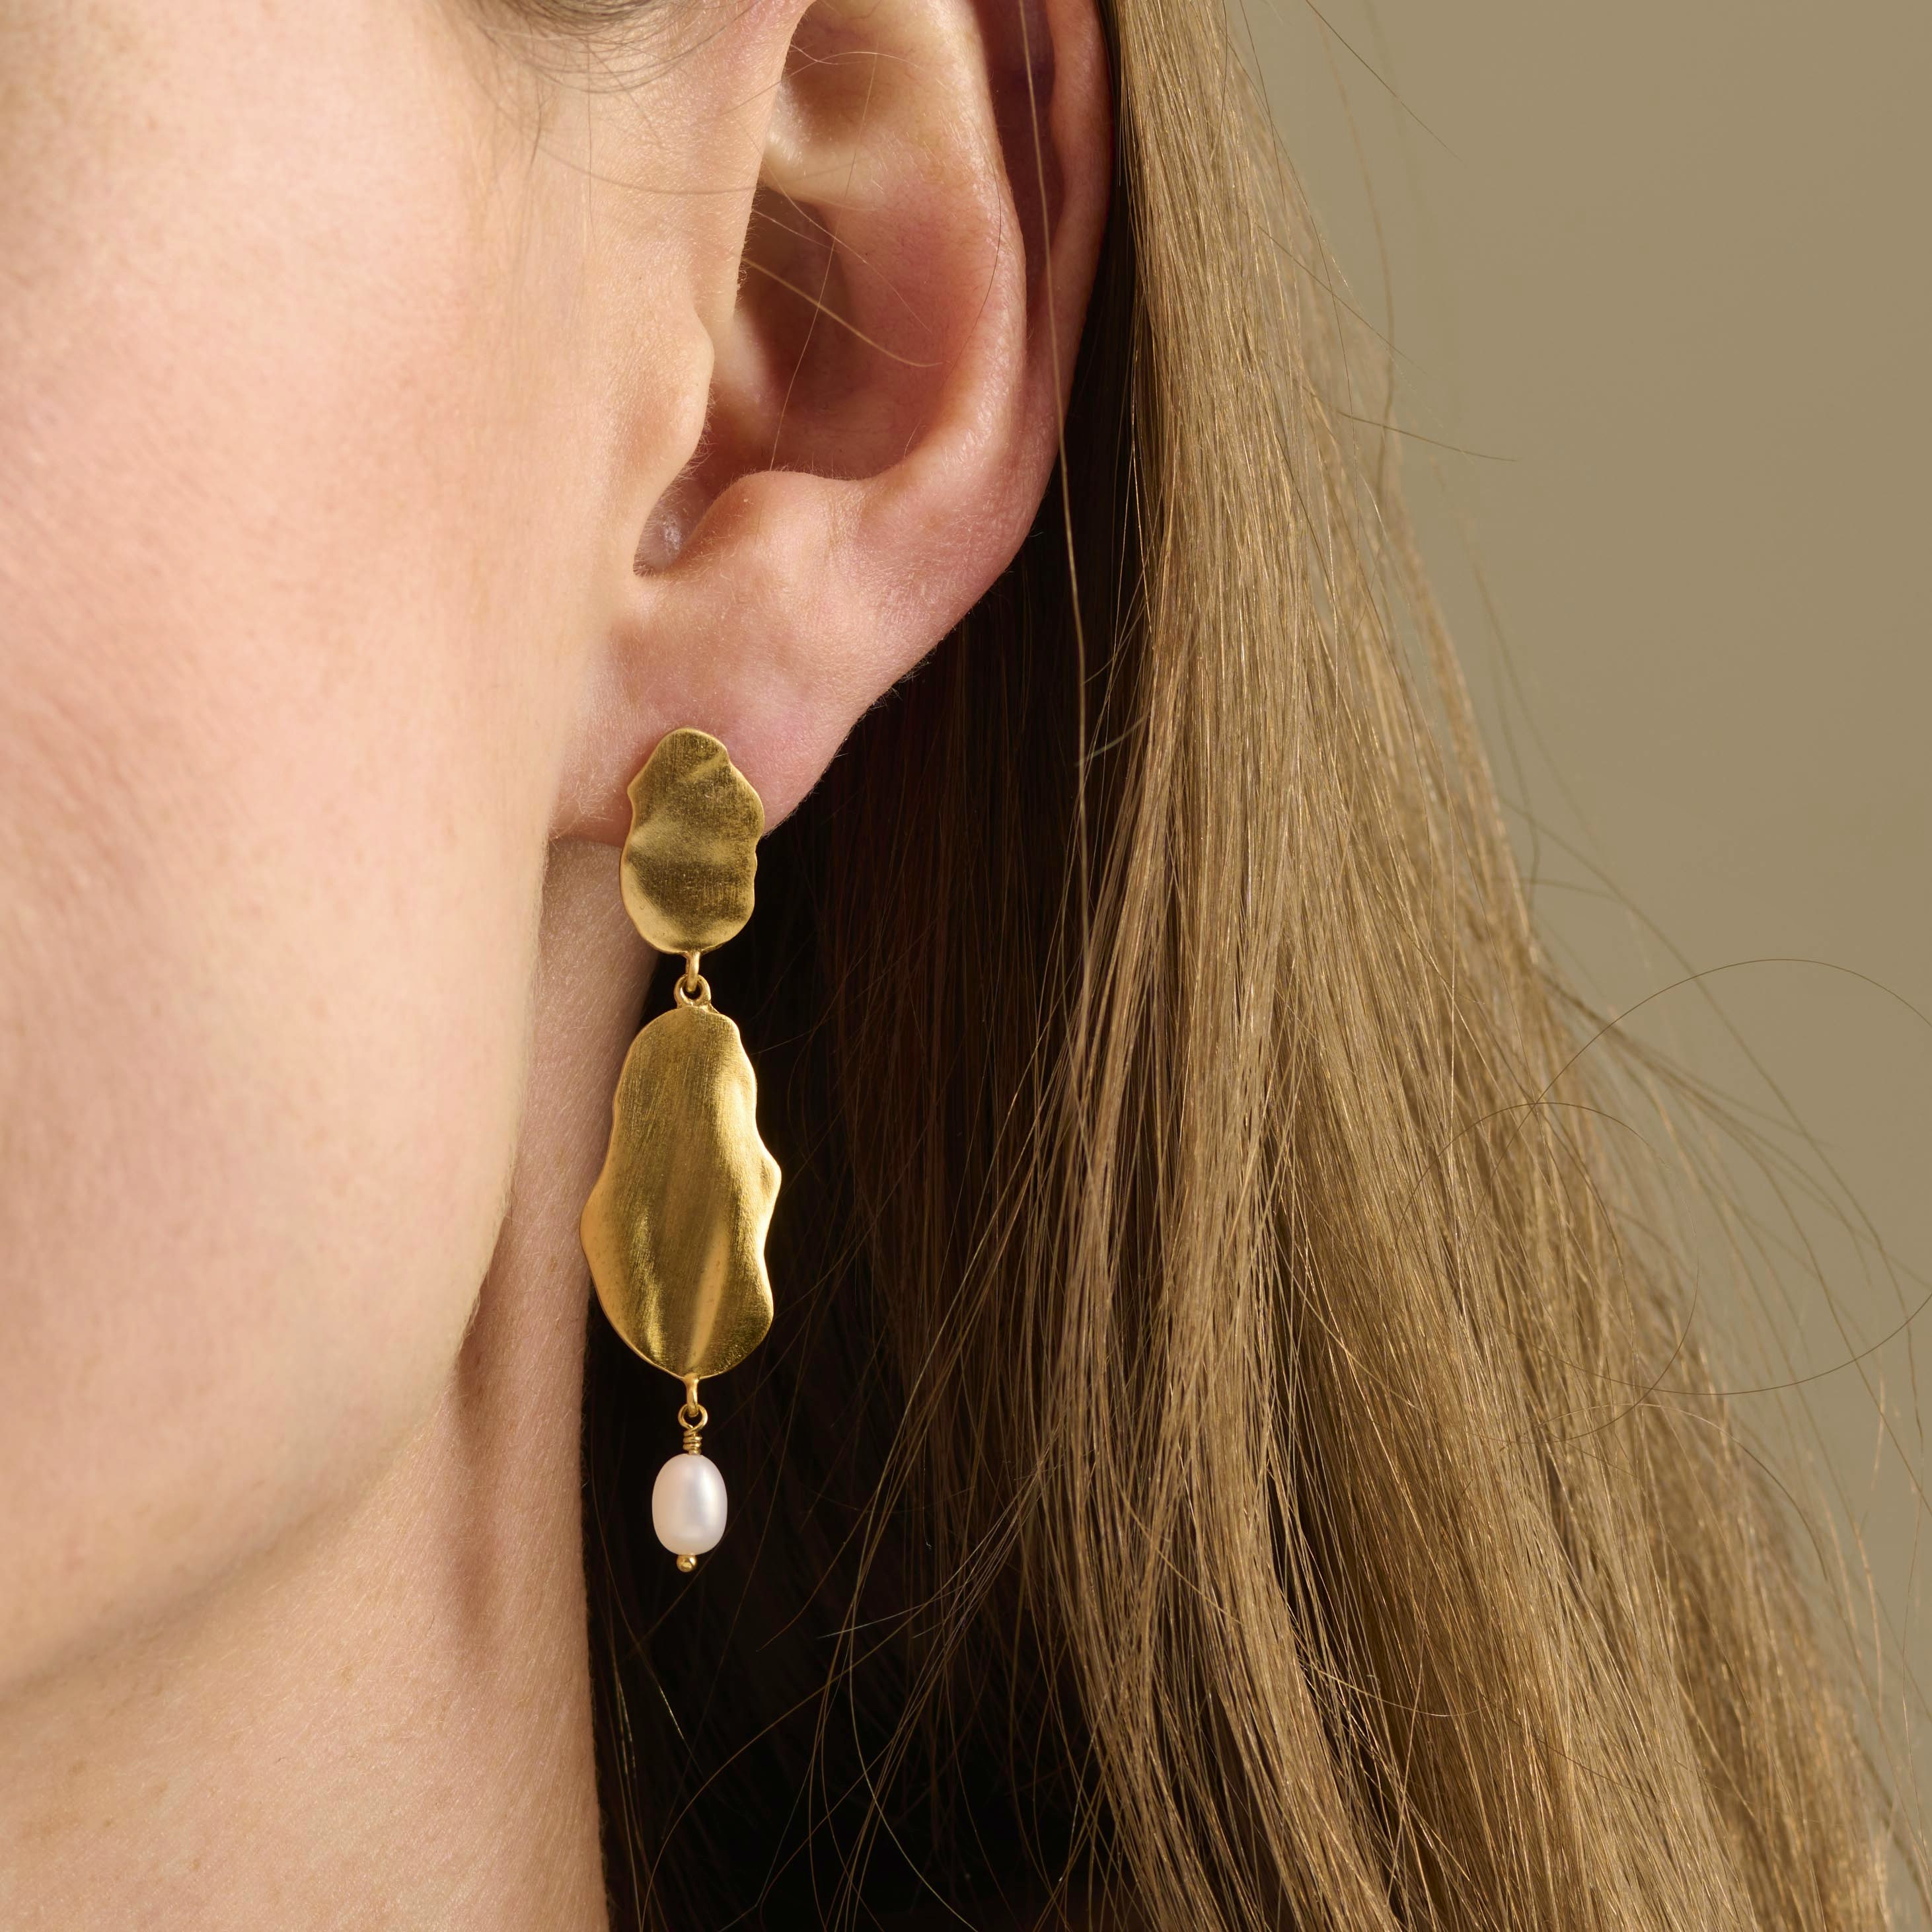 Drift Earrings from Pernille Corydon in Goldplated Silver Sterling 925